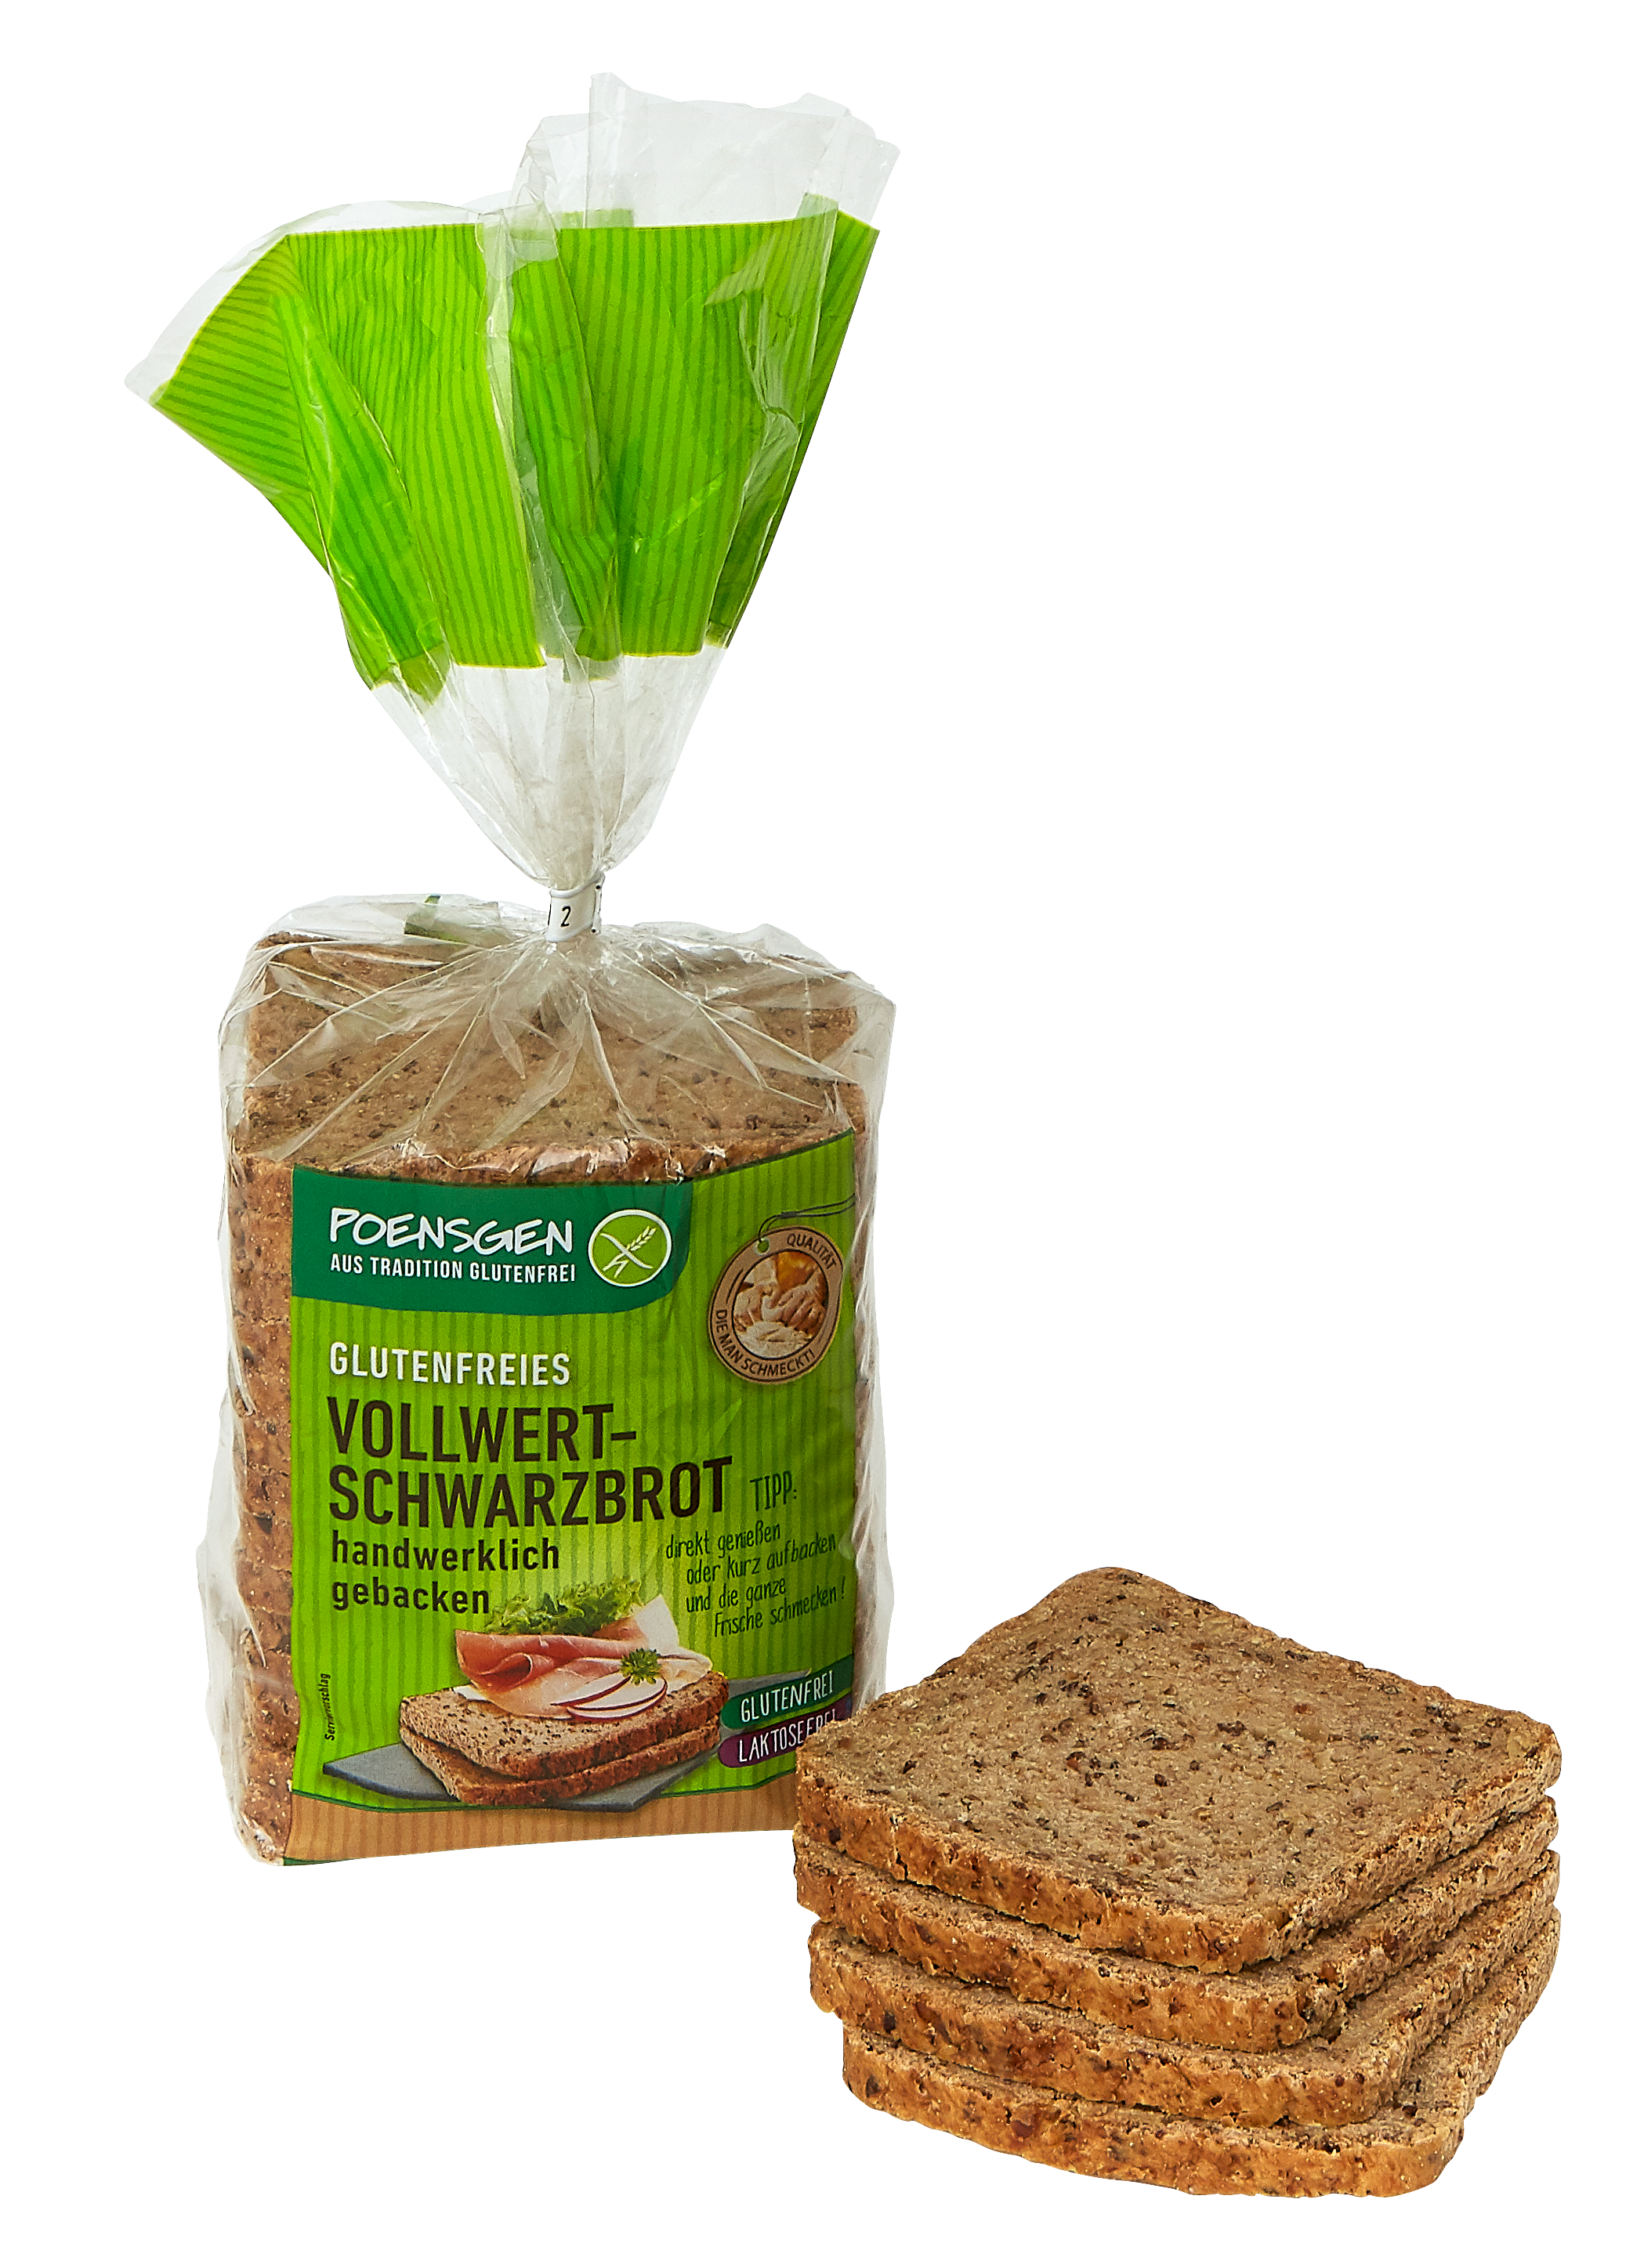 glutenfreie haltbare Brotsorten | Poensgen Brot GmbH